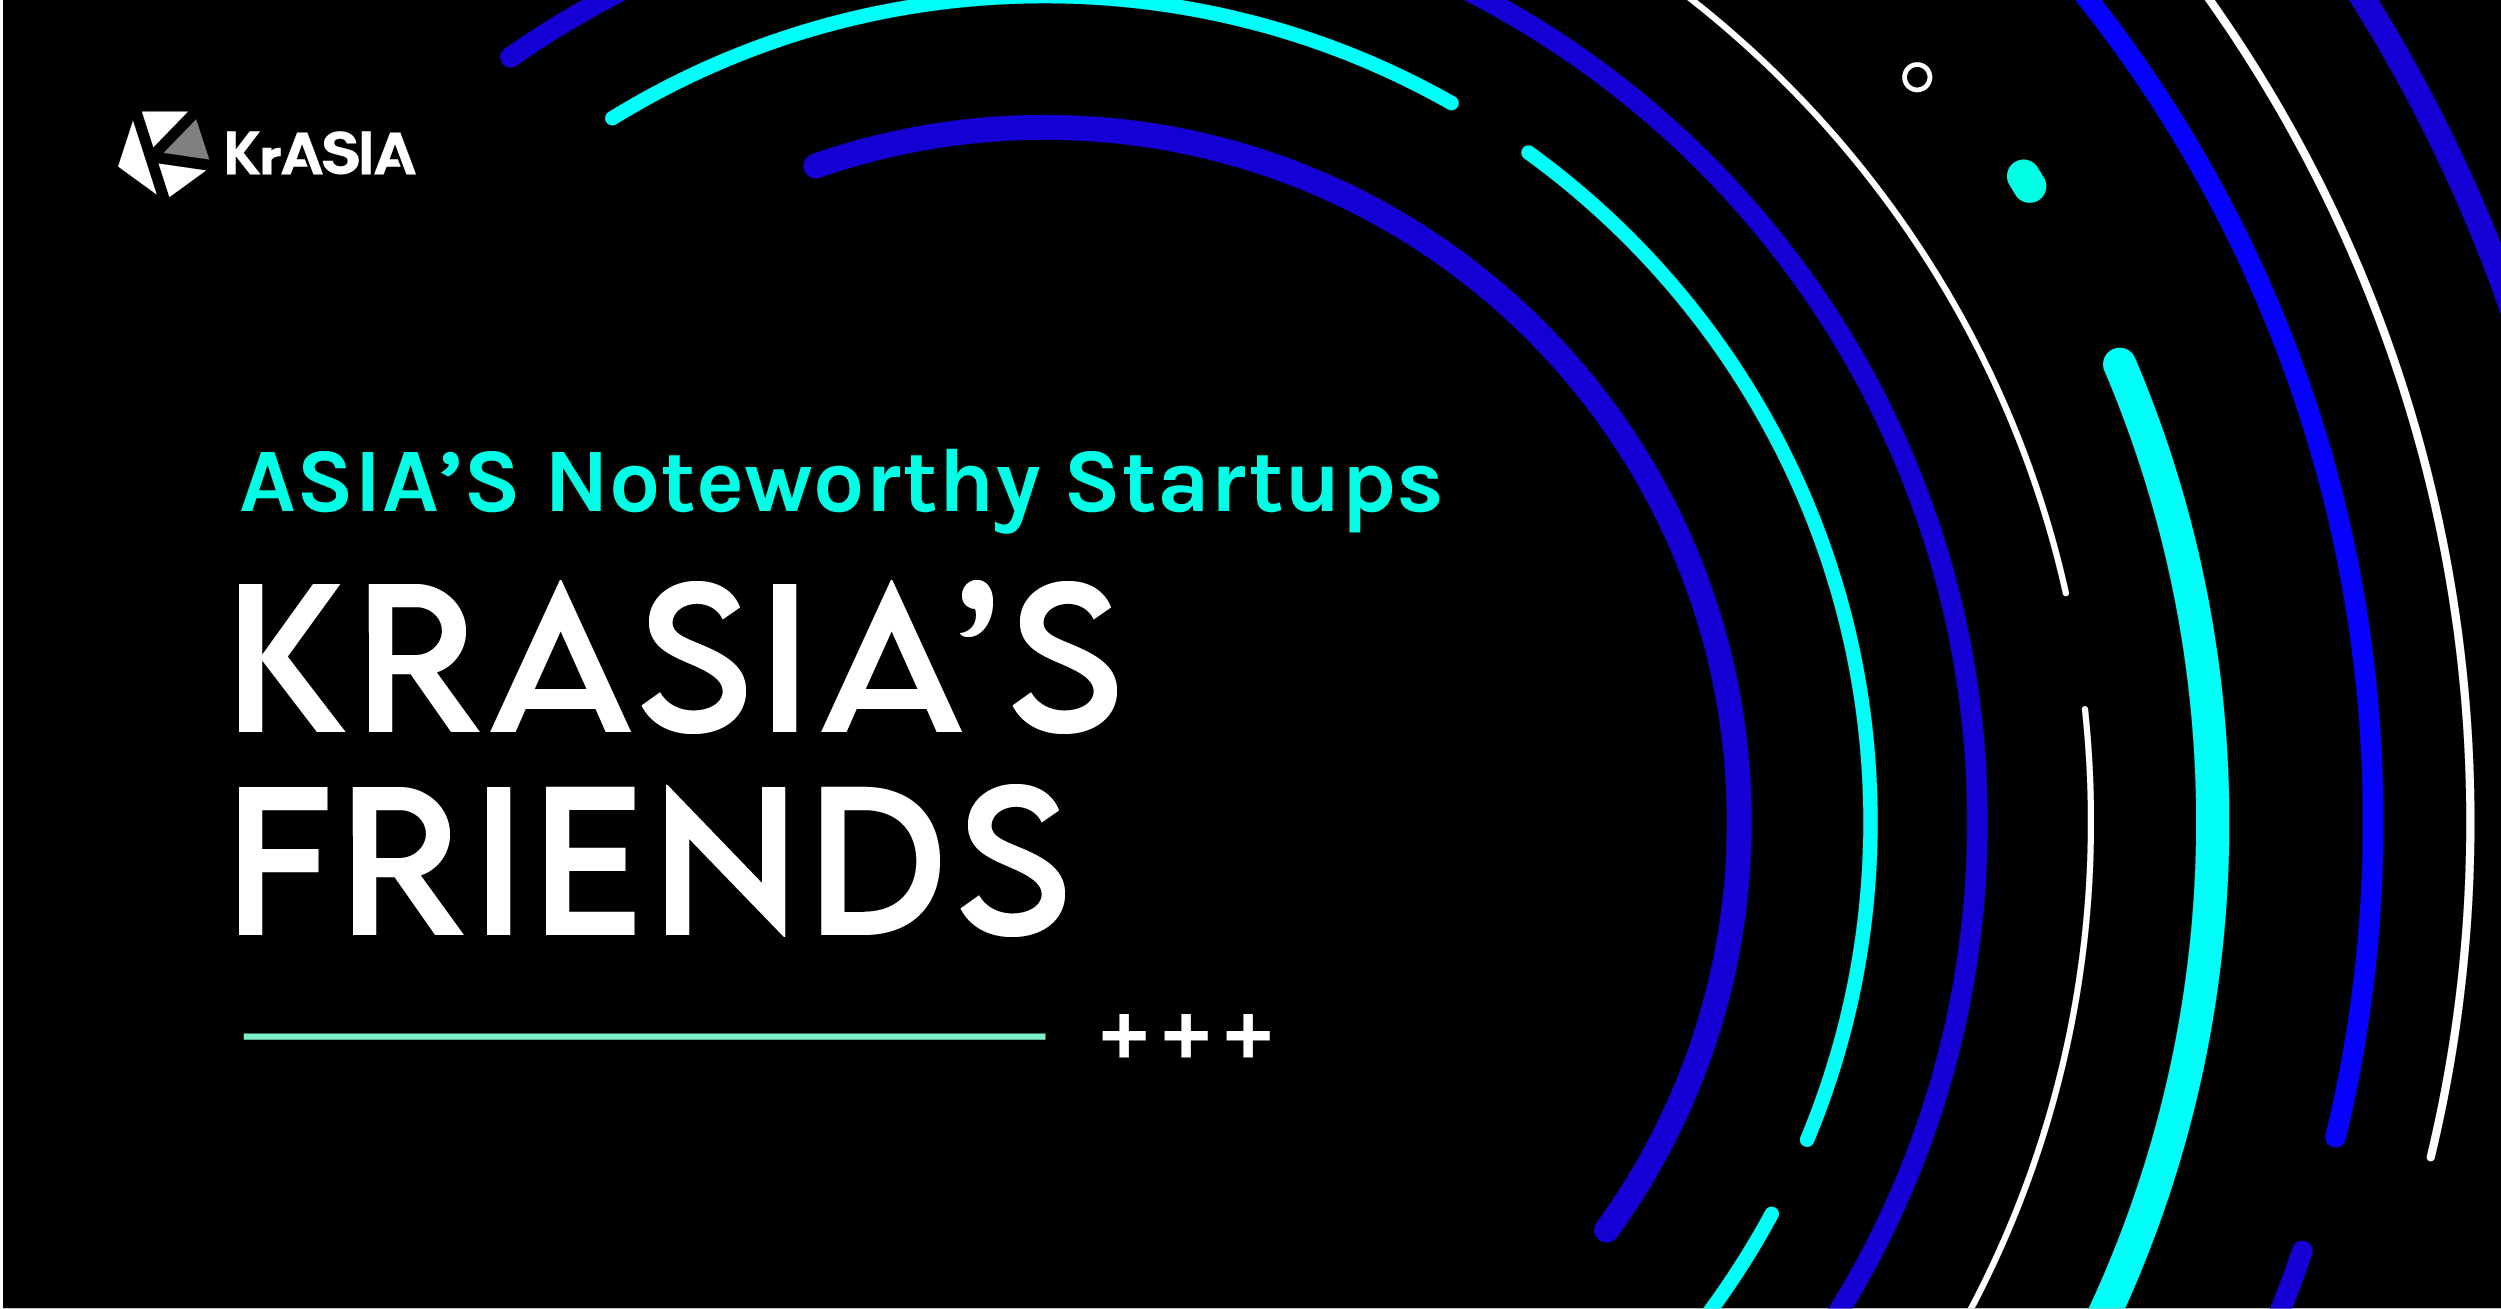 KrASIA’s Friends | Asia’s Noteworthy Startups of 2020